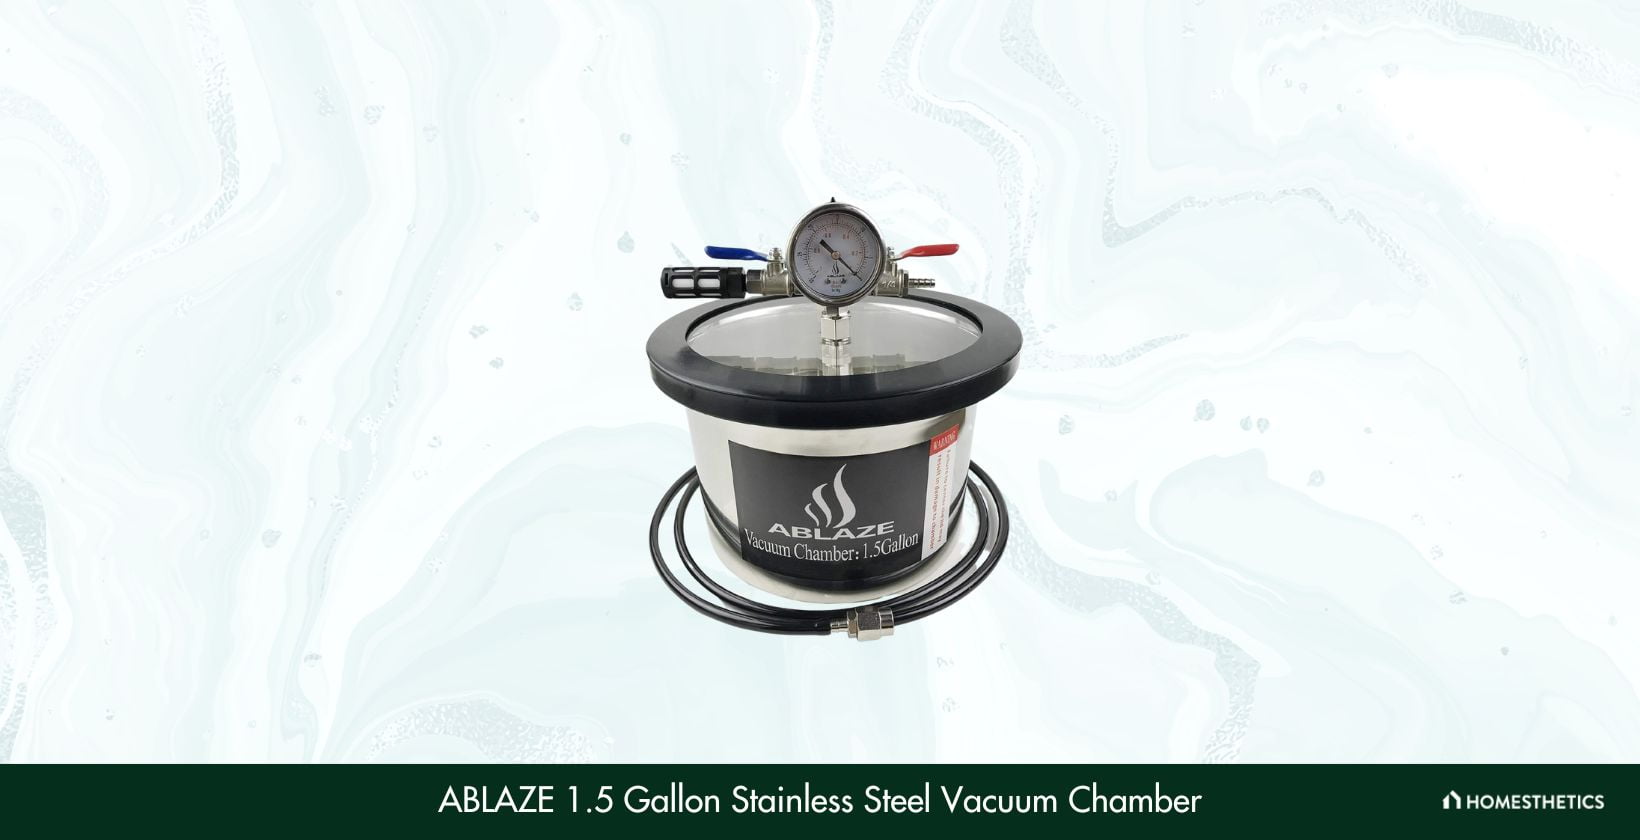 ABLAZE 1.5 Gallon Stainless Steel Vacuum Chamber